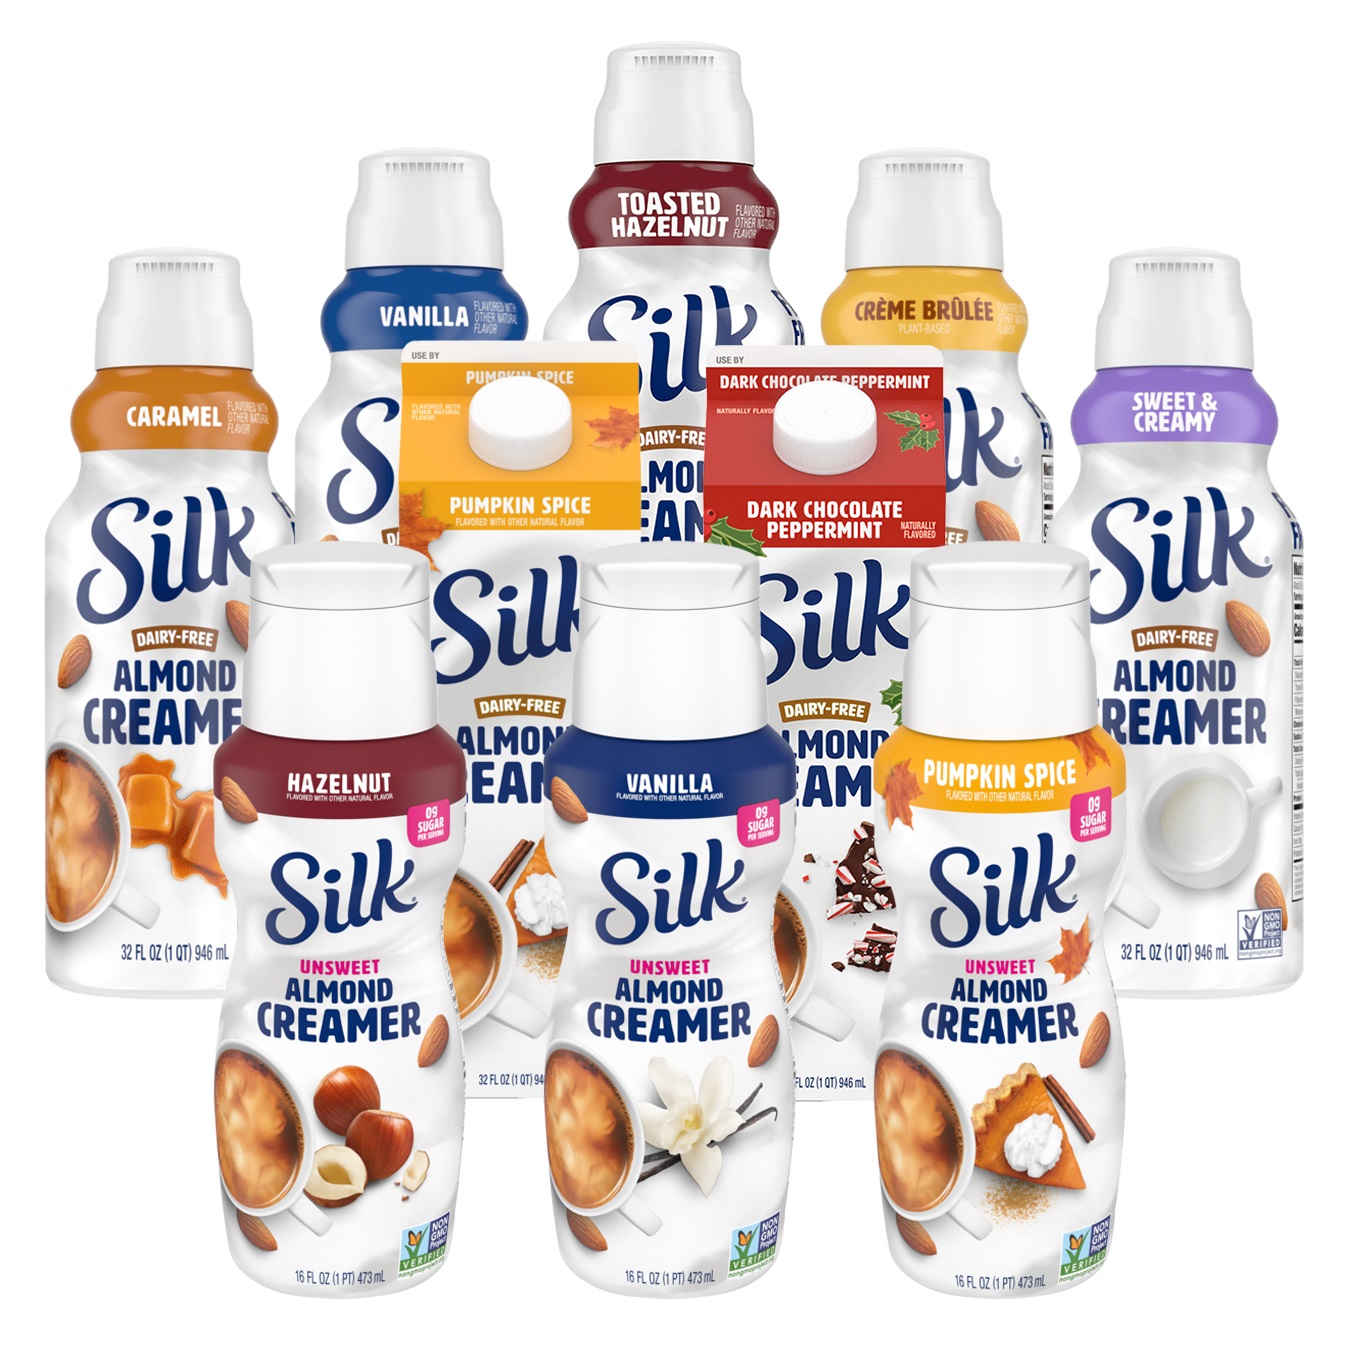 Silk Almond Creamer Reviews and Information - Now in 10 Dairy-Free, Soy-Free, Vegan Varieties. 